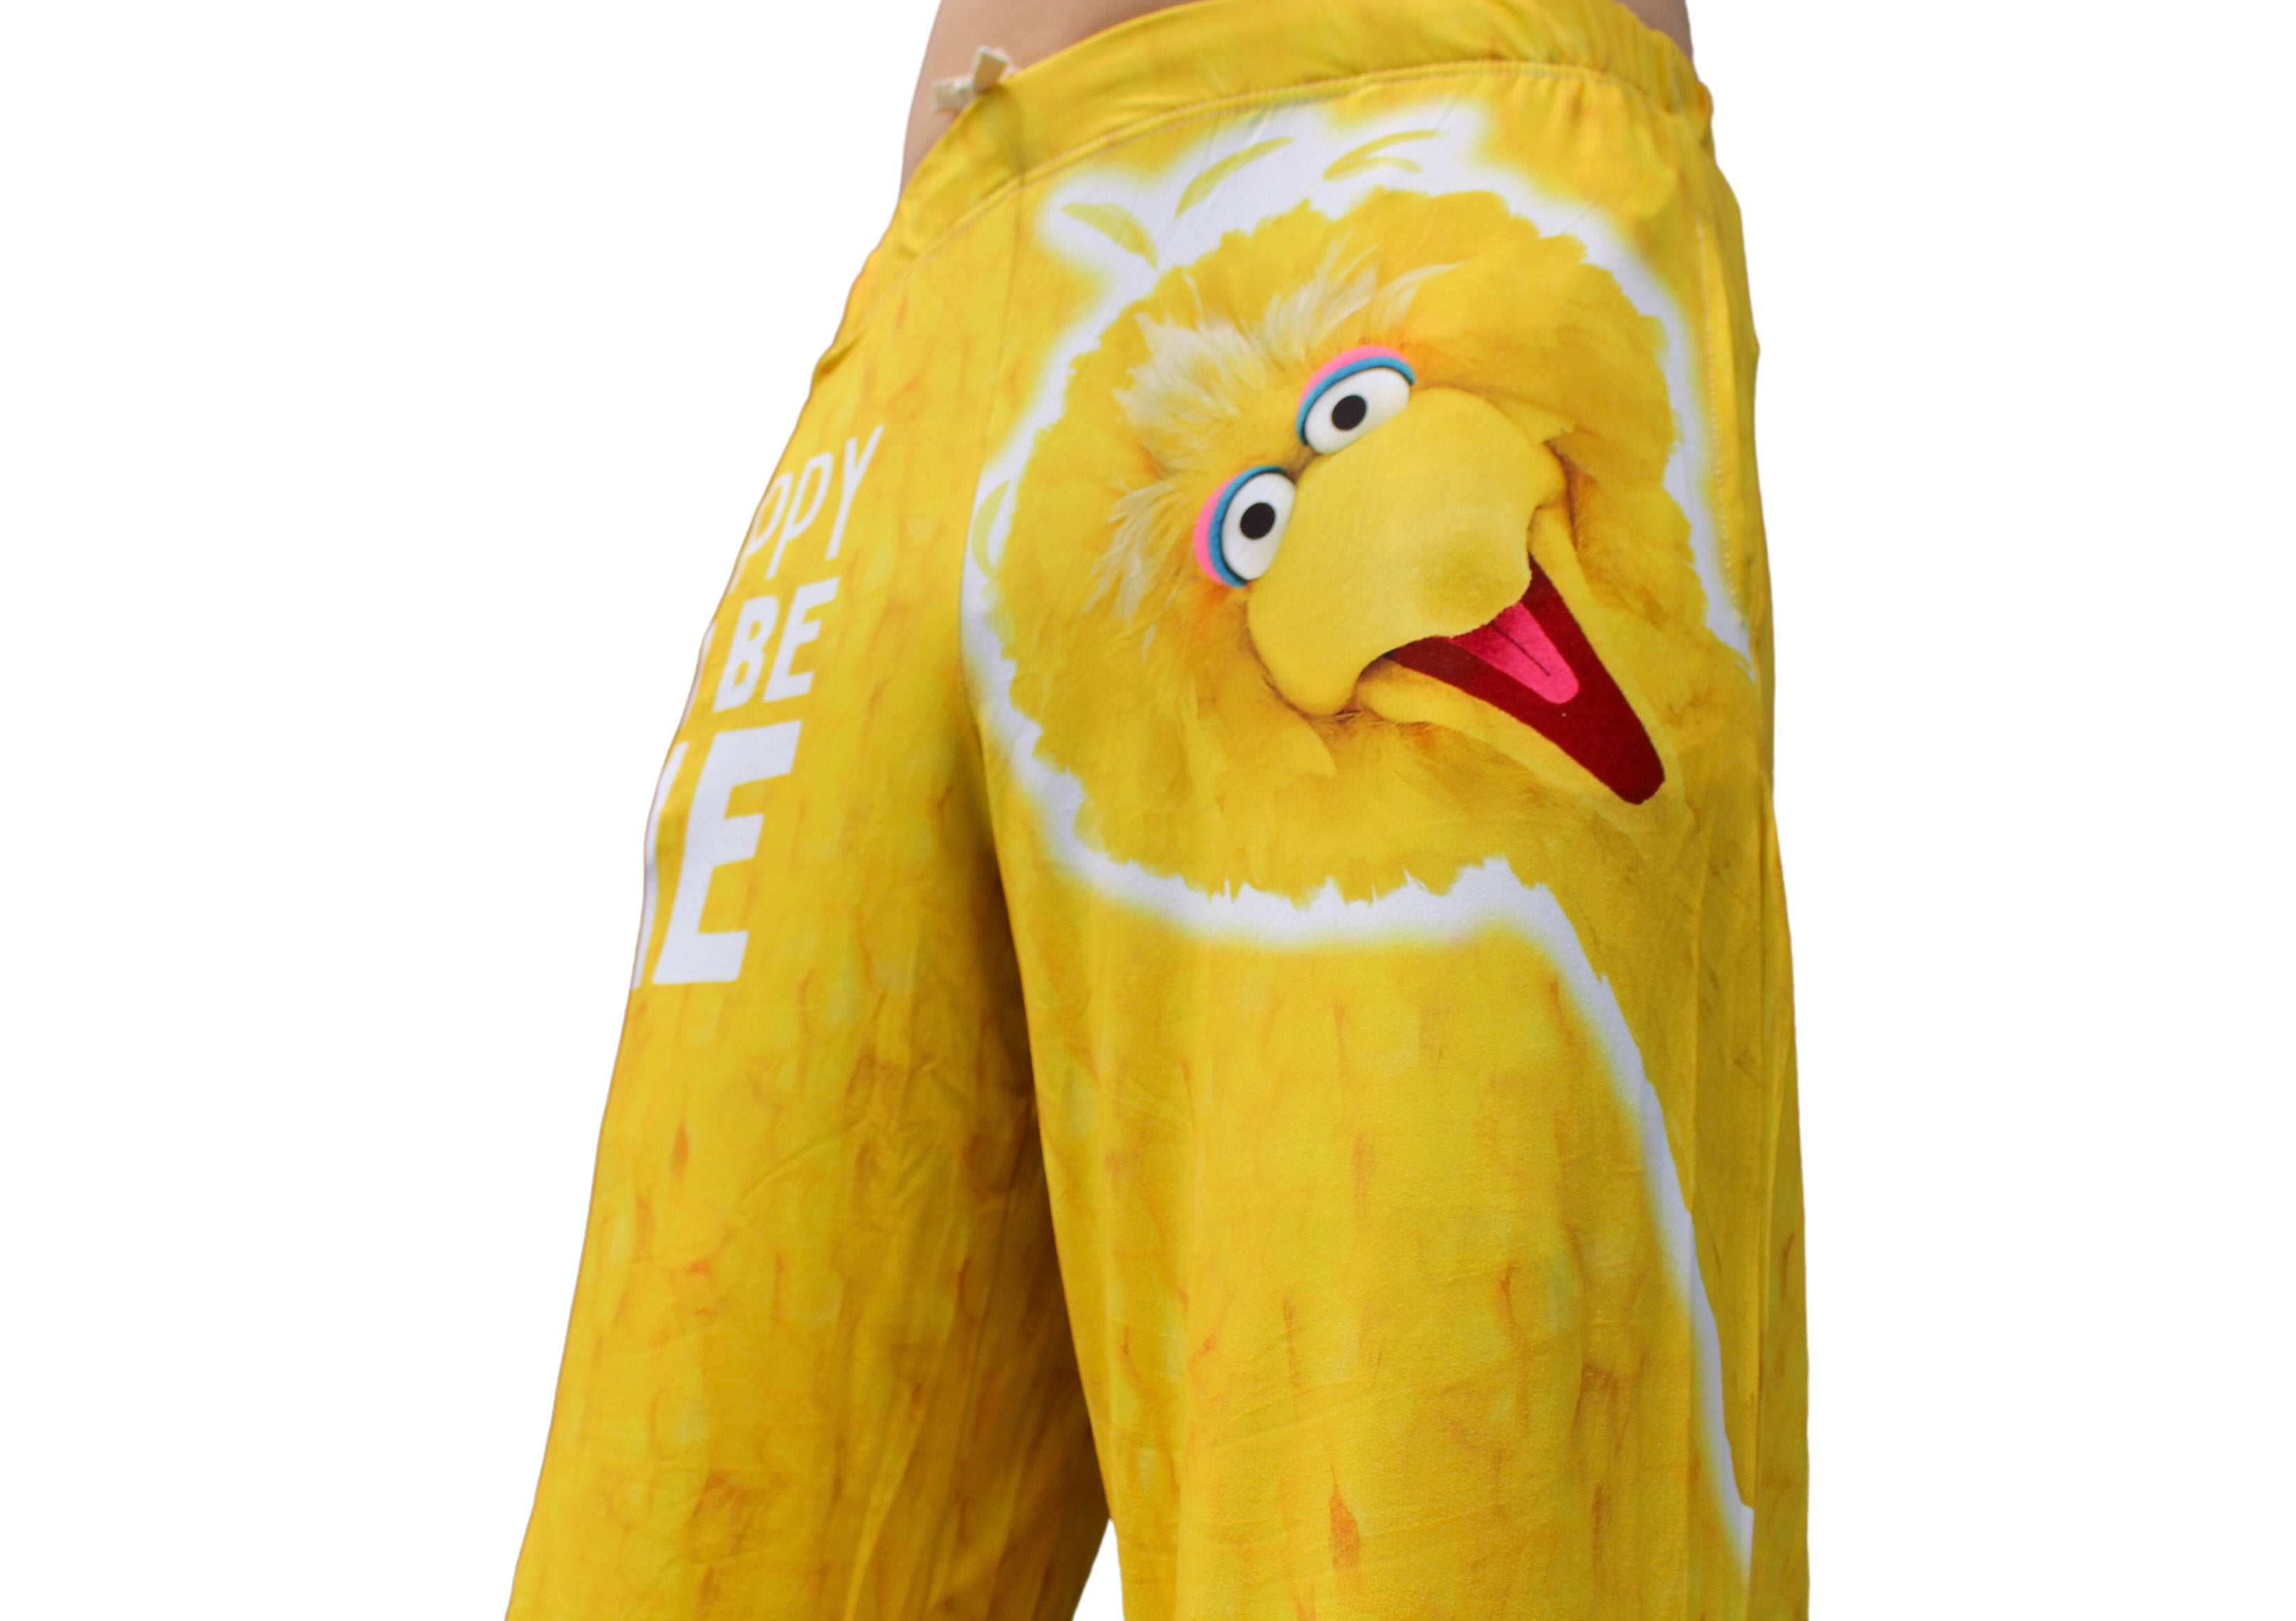 Sesame Street Big Bird Pajama Lounge Pants on model front/side angle view close up of big bird graphic